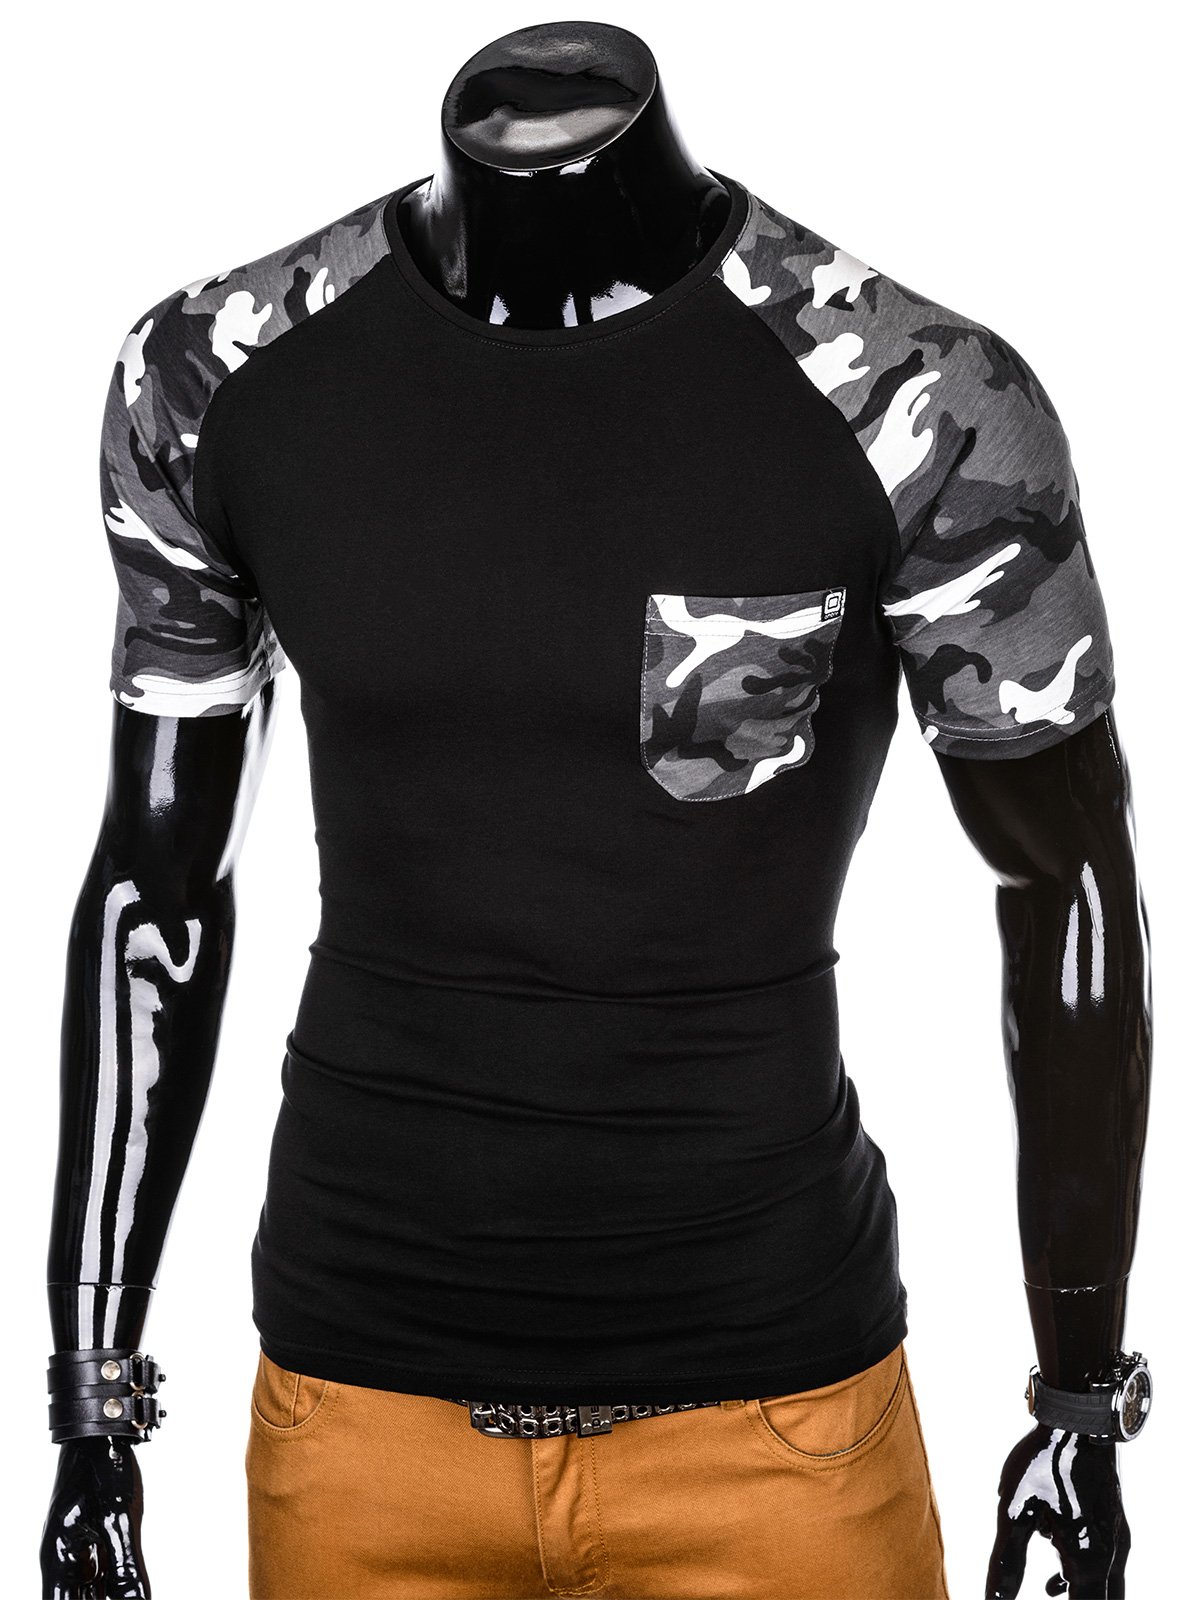 Men's camo printed t-shirt S1013 - black/grey | MODONE wholesale ...